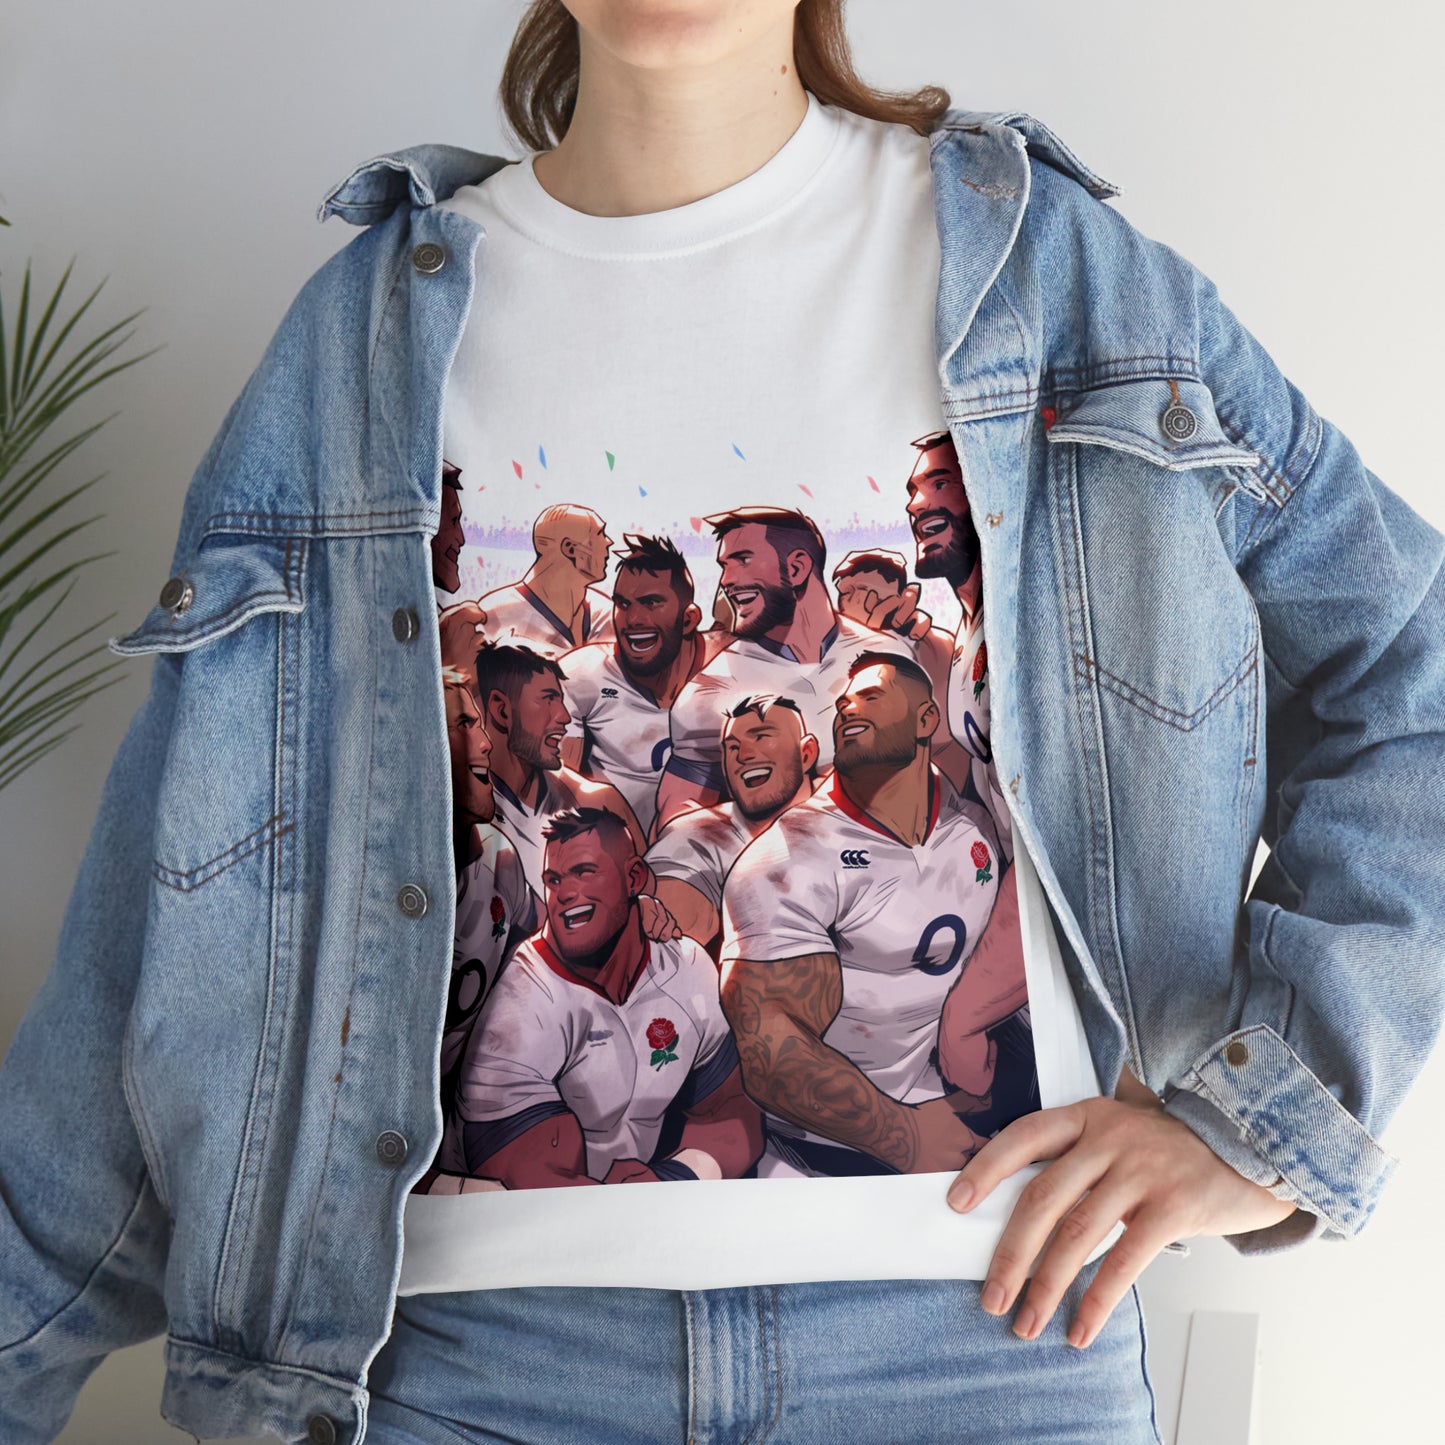 Post Match England - light shirts